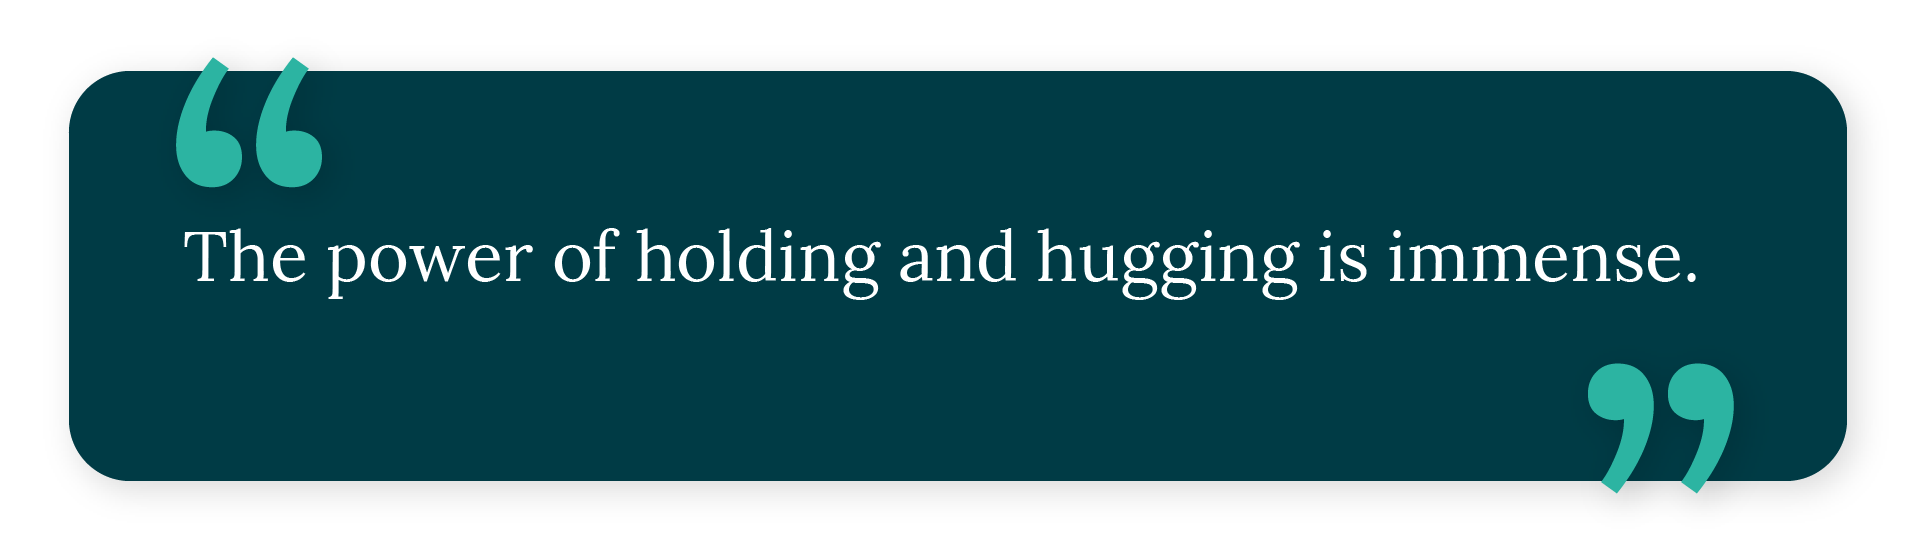 Power of hugging